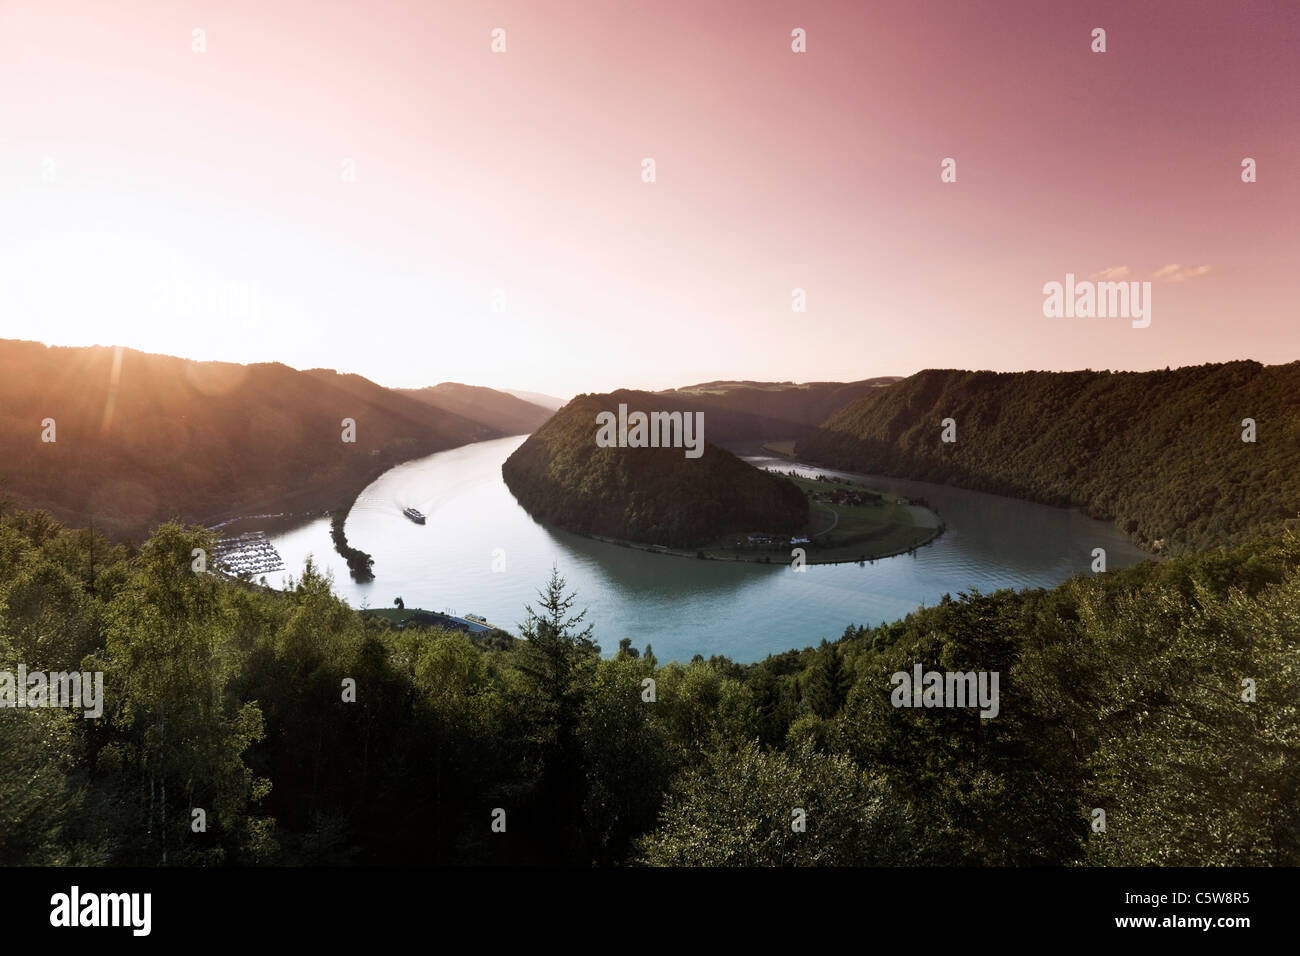 Austria, View of danube river at dusk Stock Photo